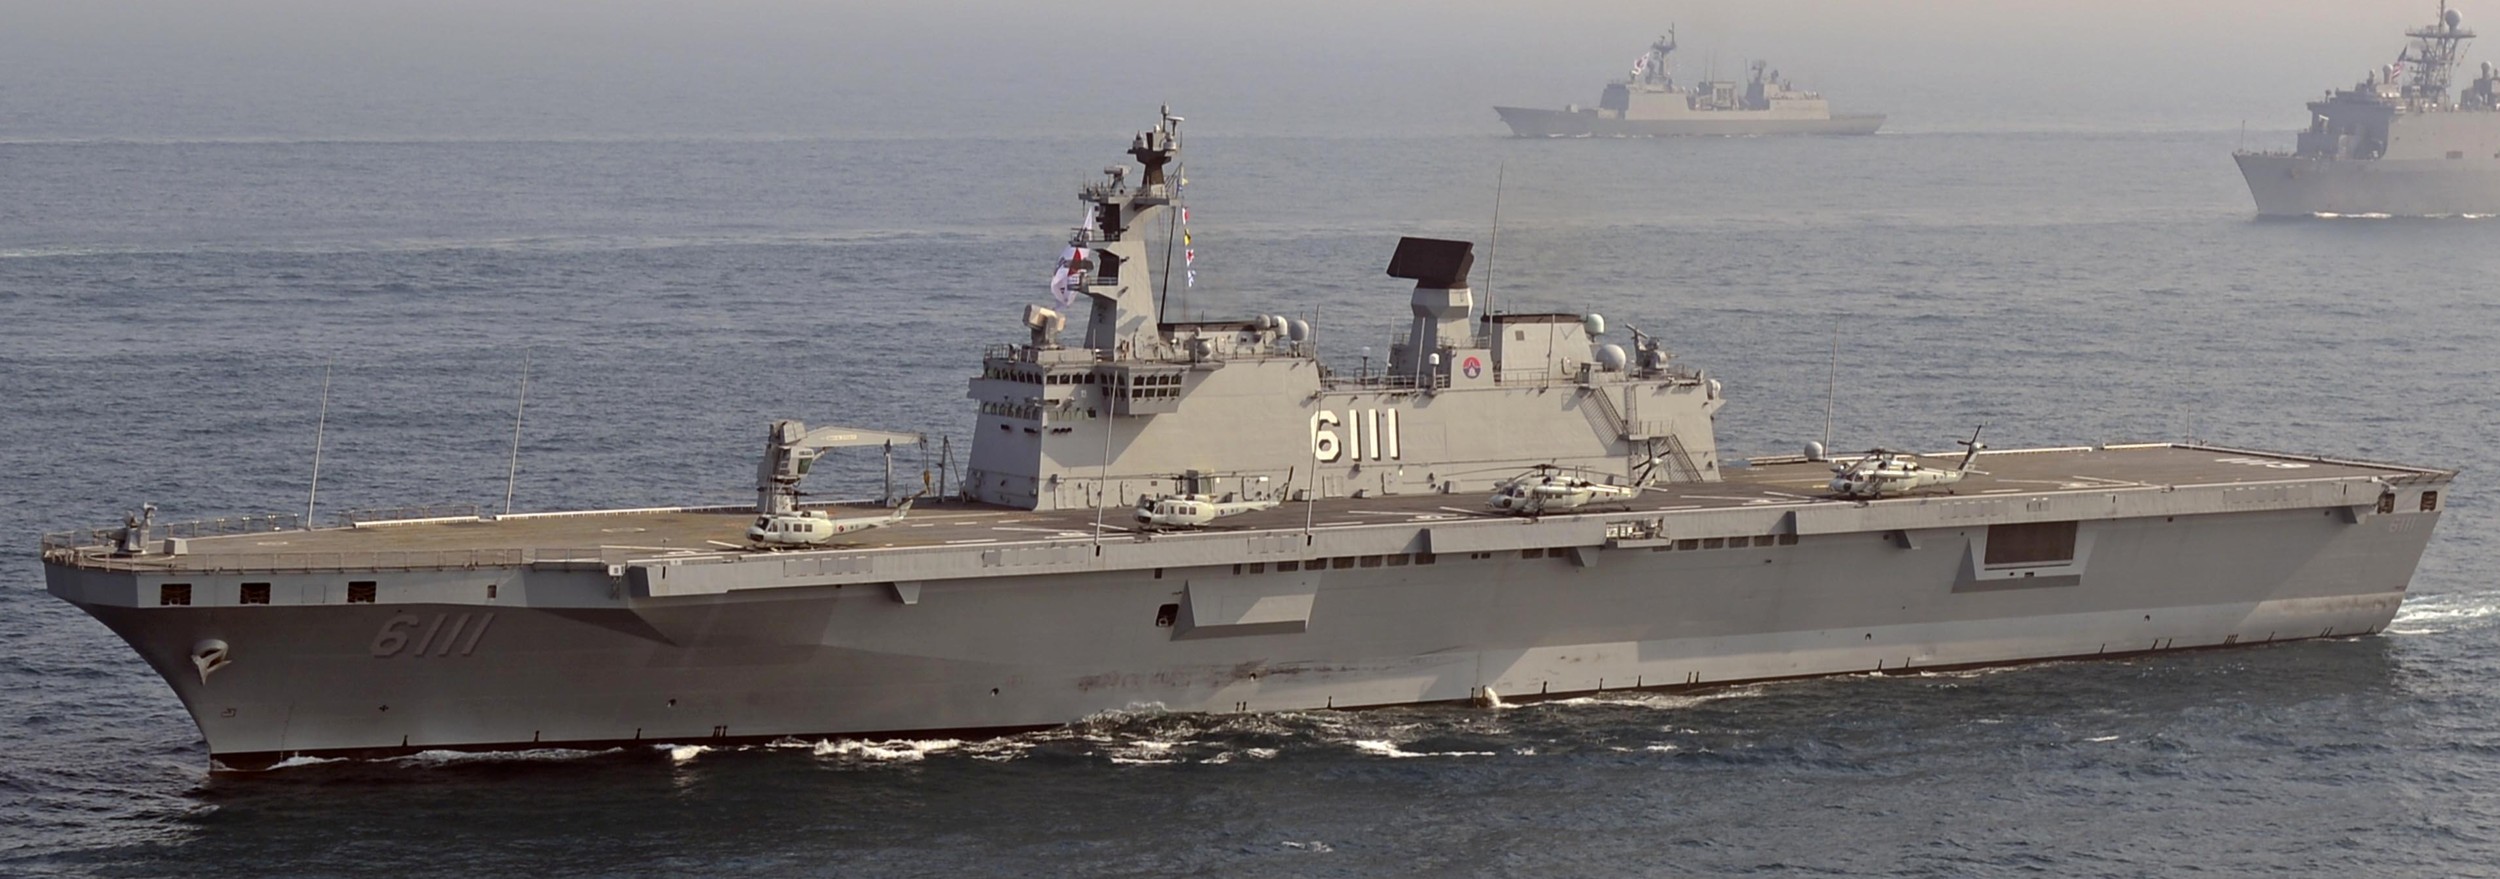 lph-6111 roks dokdo landing platform helicopter amphibious assault ship korean navy rokn 10